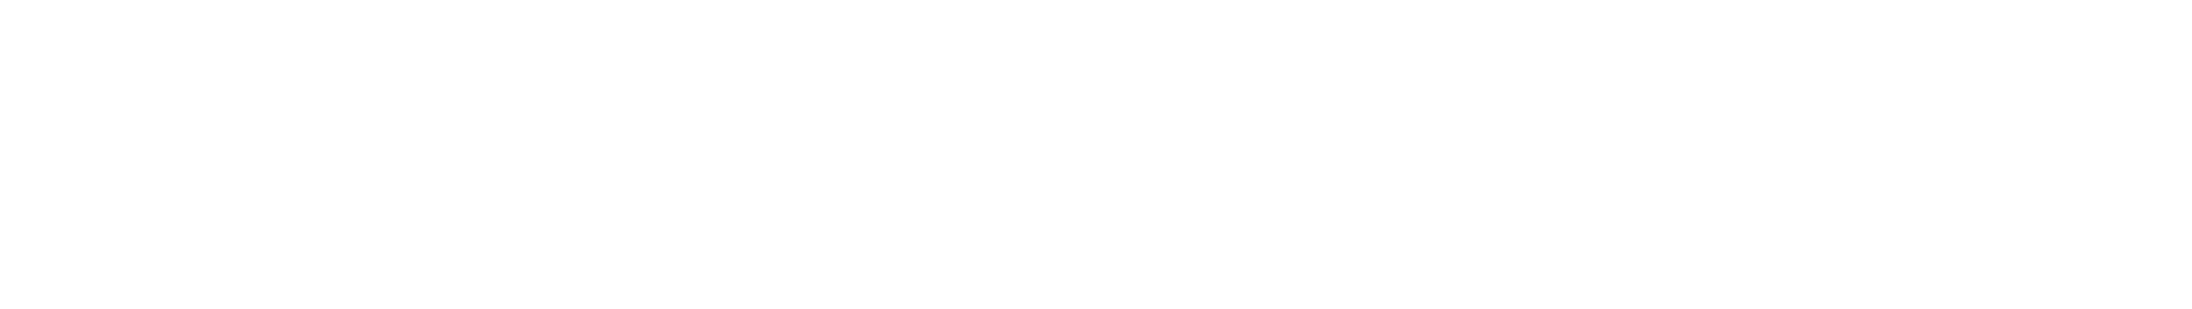 Tulsa Opera logo